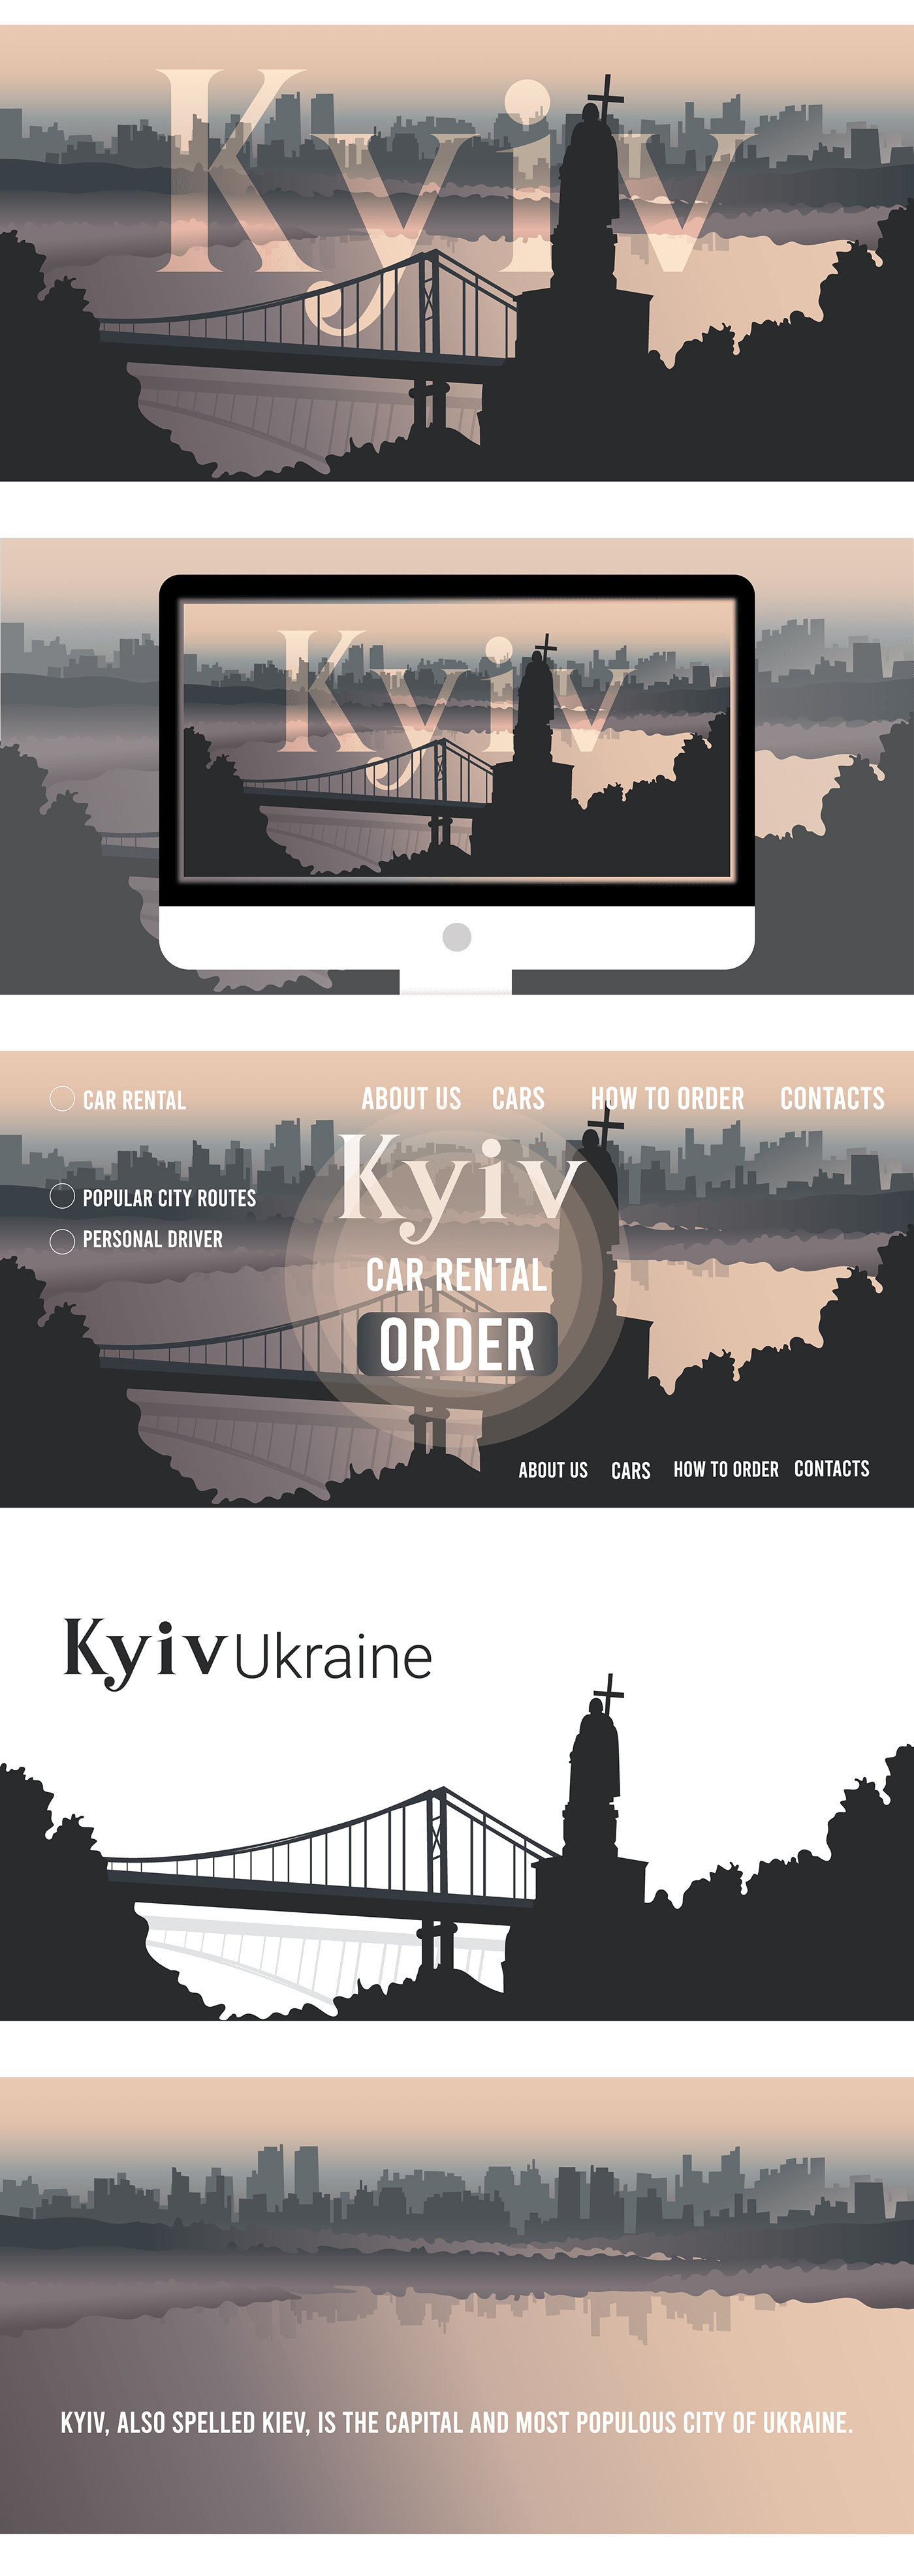 Kyiv ukraine Silhouette art Landscape Travel city Urban architecture